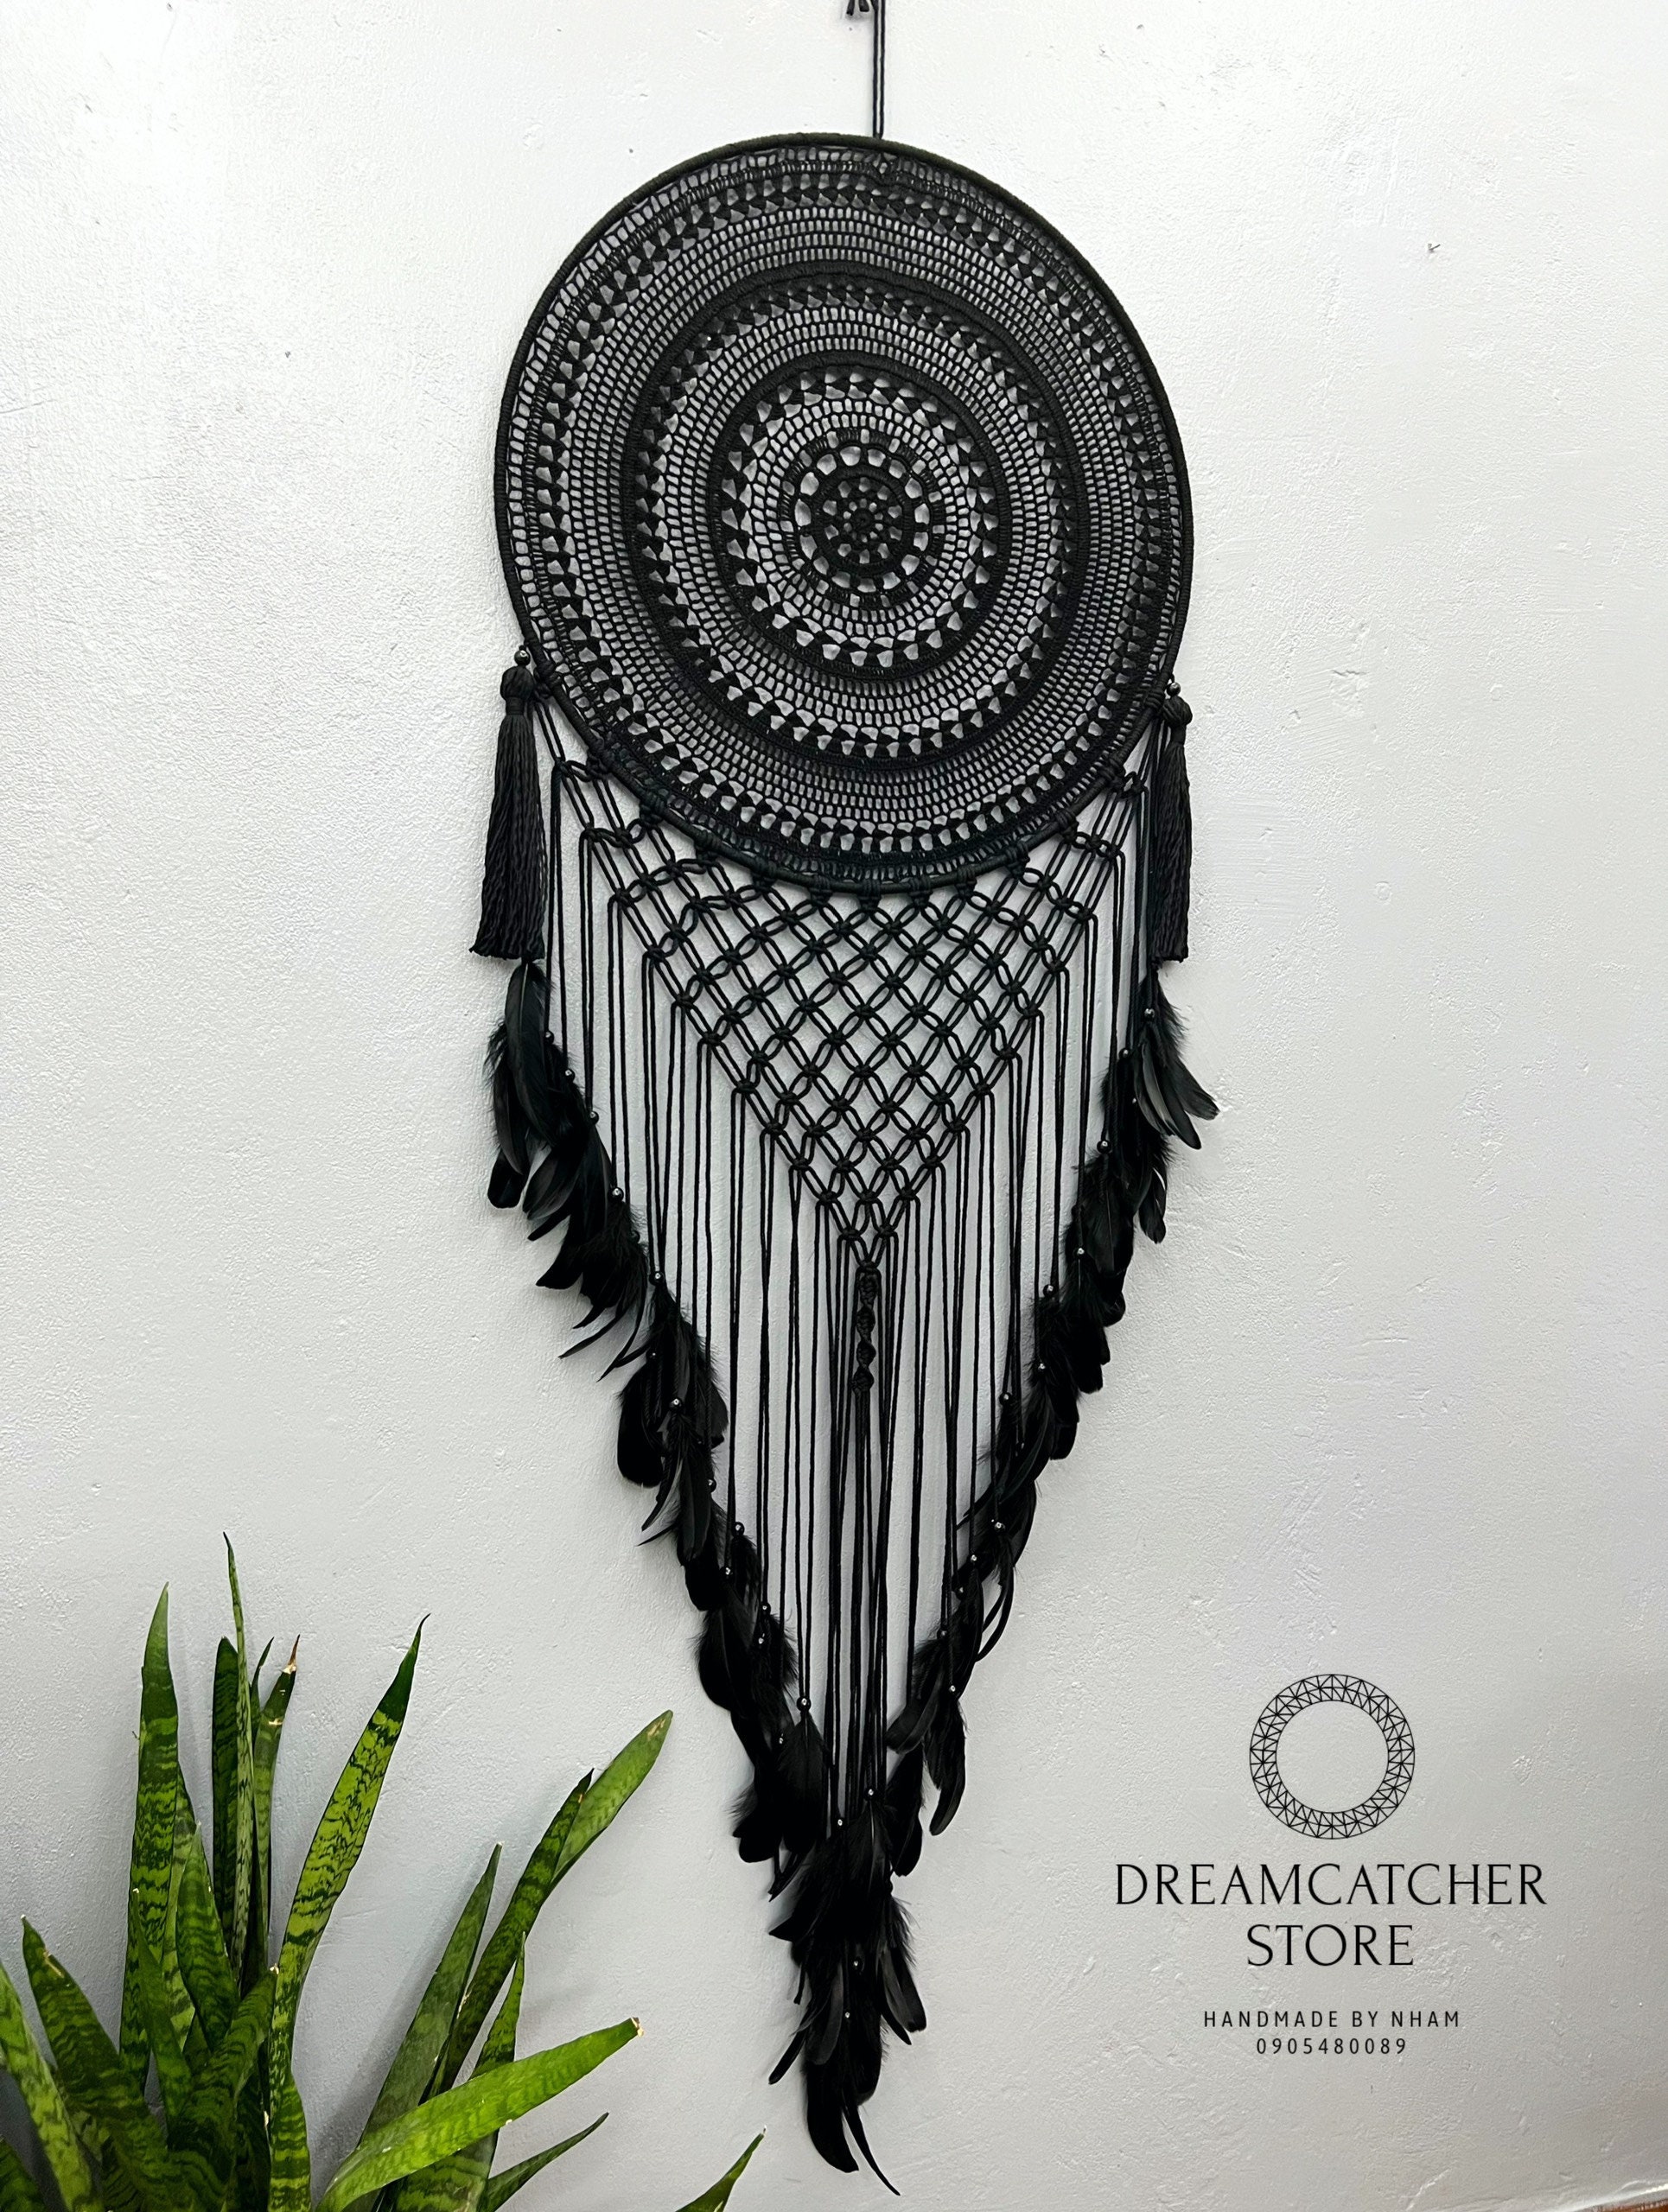 Buy Large Black Dreamcatcher Bedroom Decoration, Large Wall